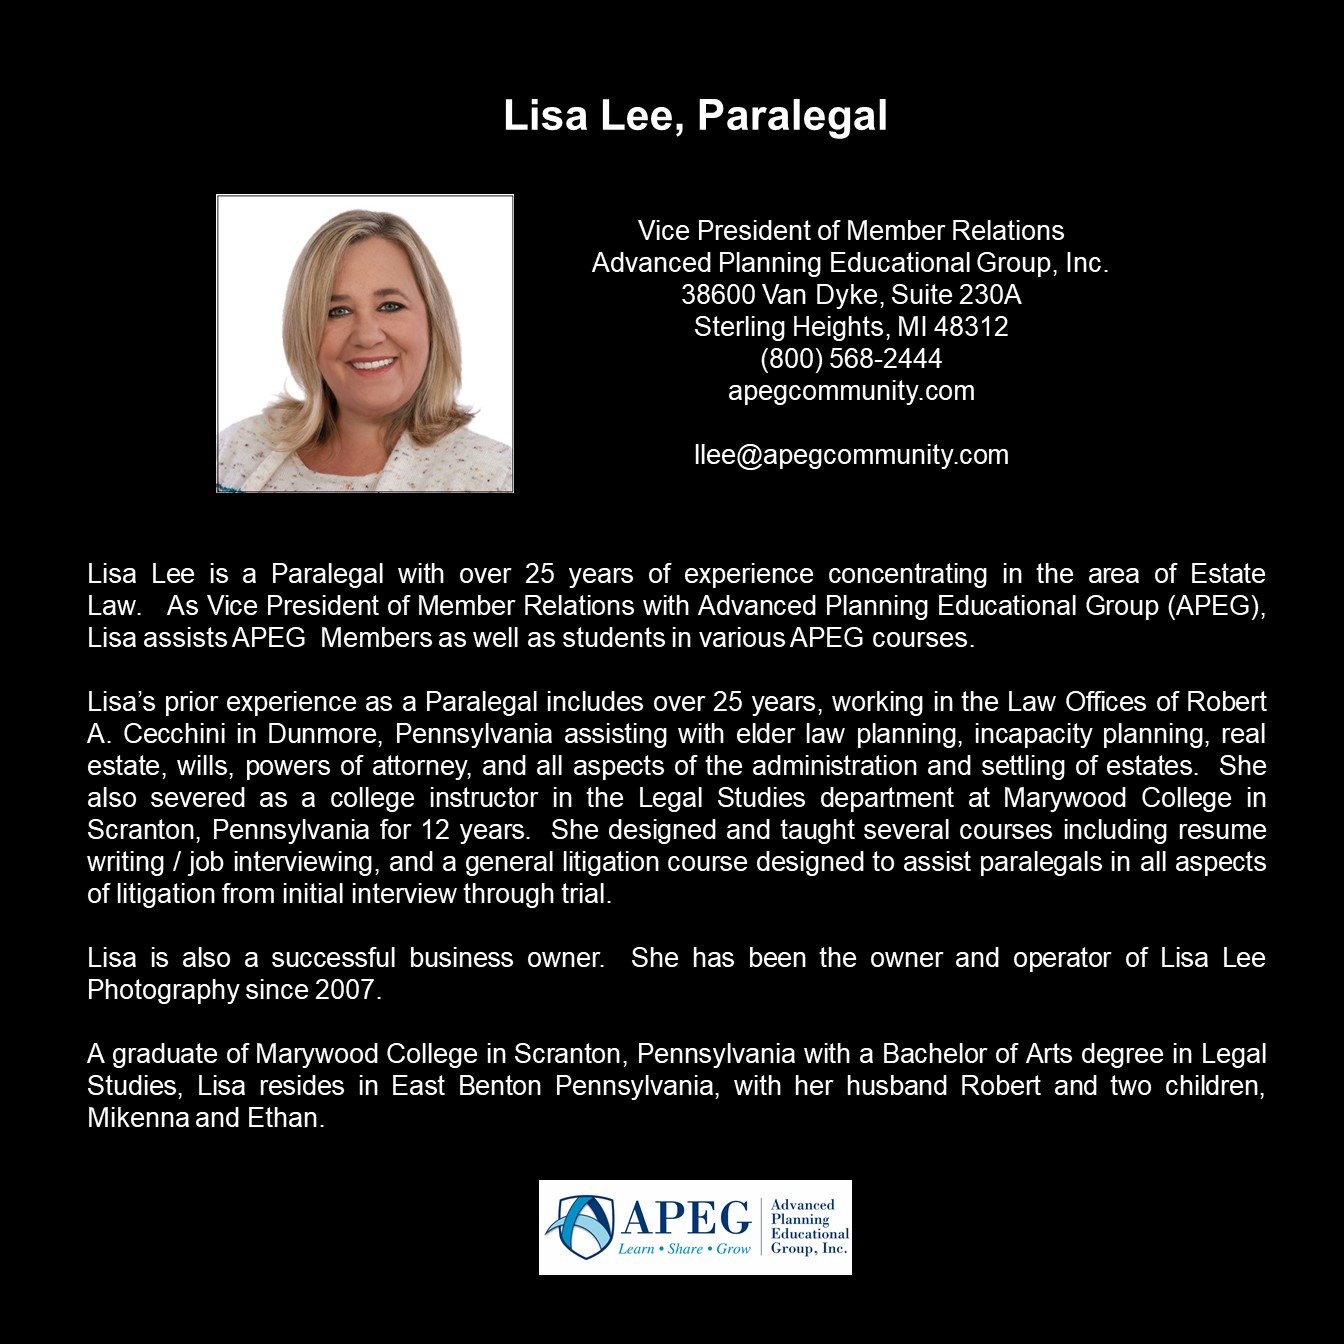 APEG Lisa Lee Biography